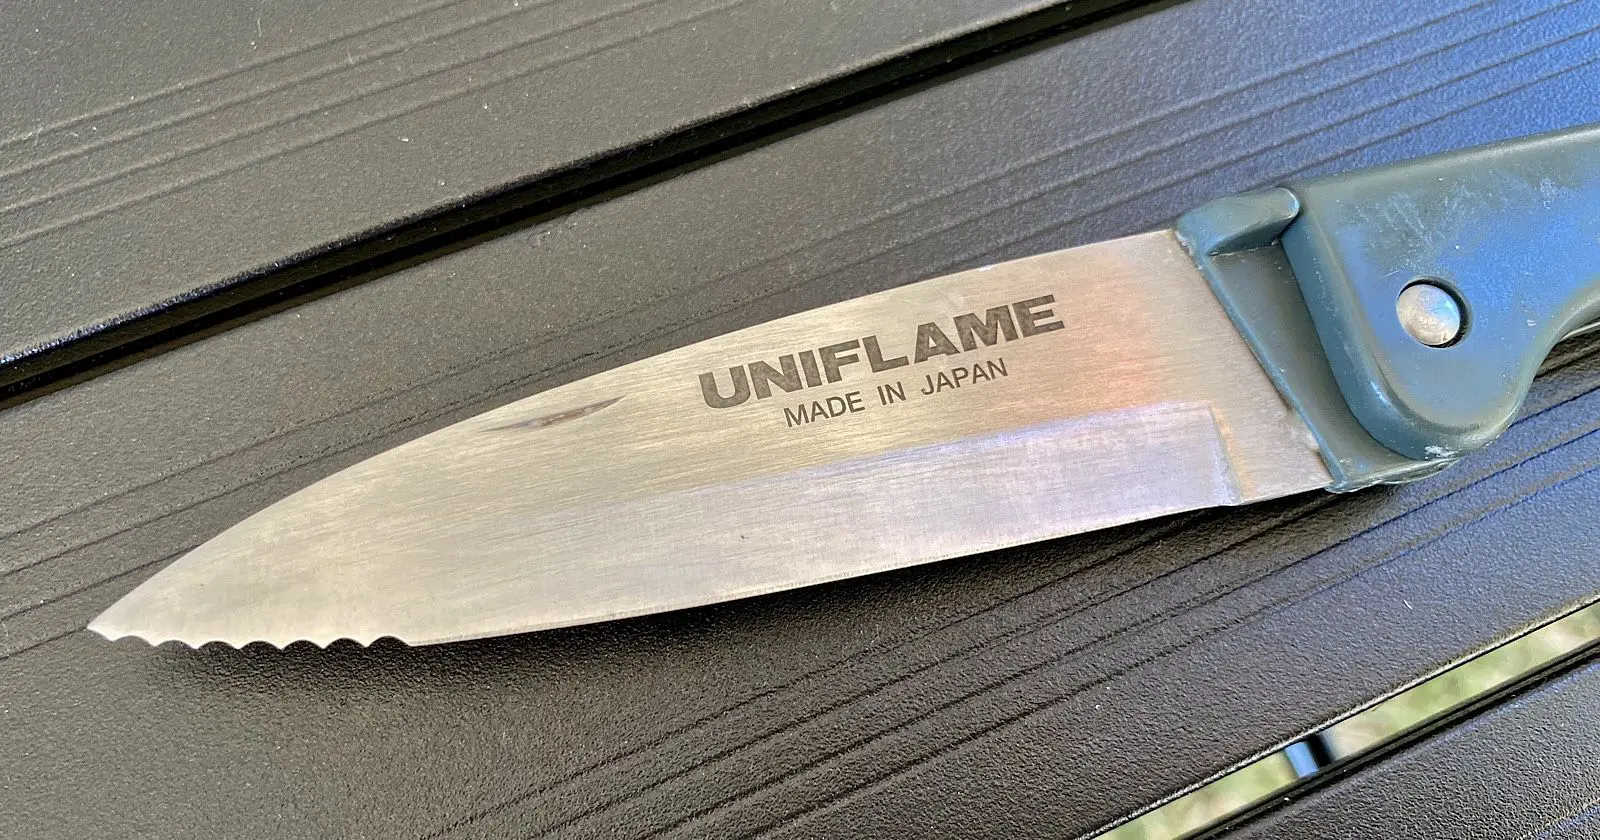 Uniflame ギザ刃キャンプナイフは携帯性も使い勝手も抜群 ユニフレームの調理用ナイフ Takibi タキビ キャンプ アウトドアの総合情報サイト